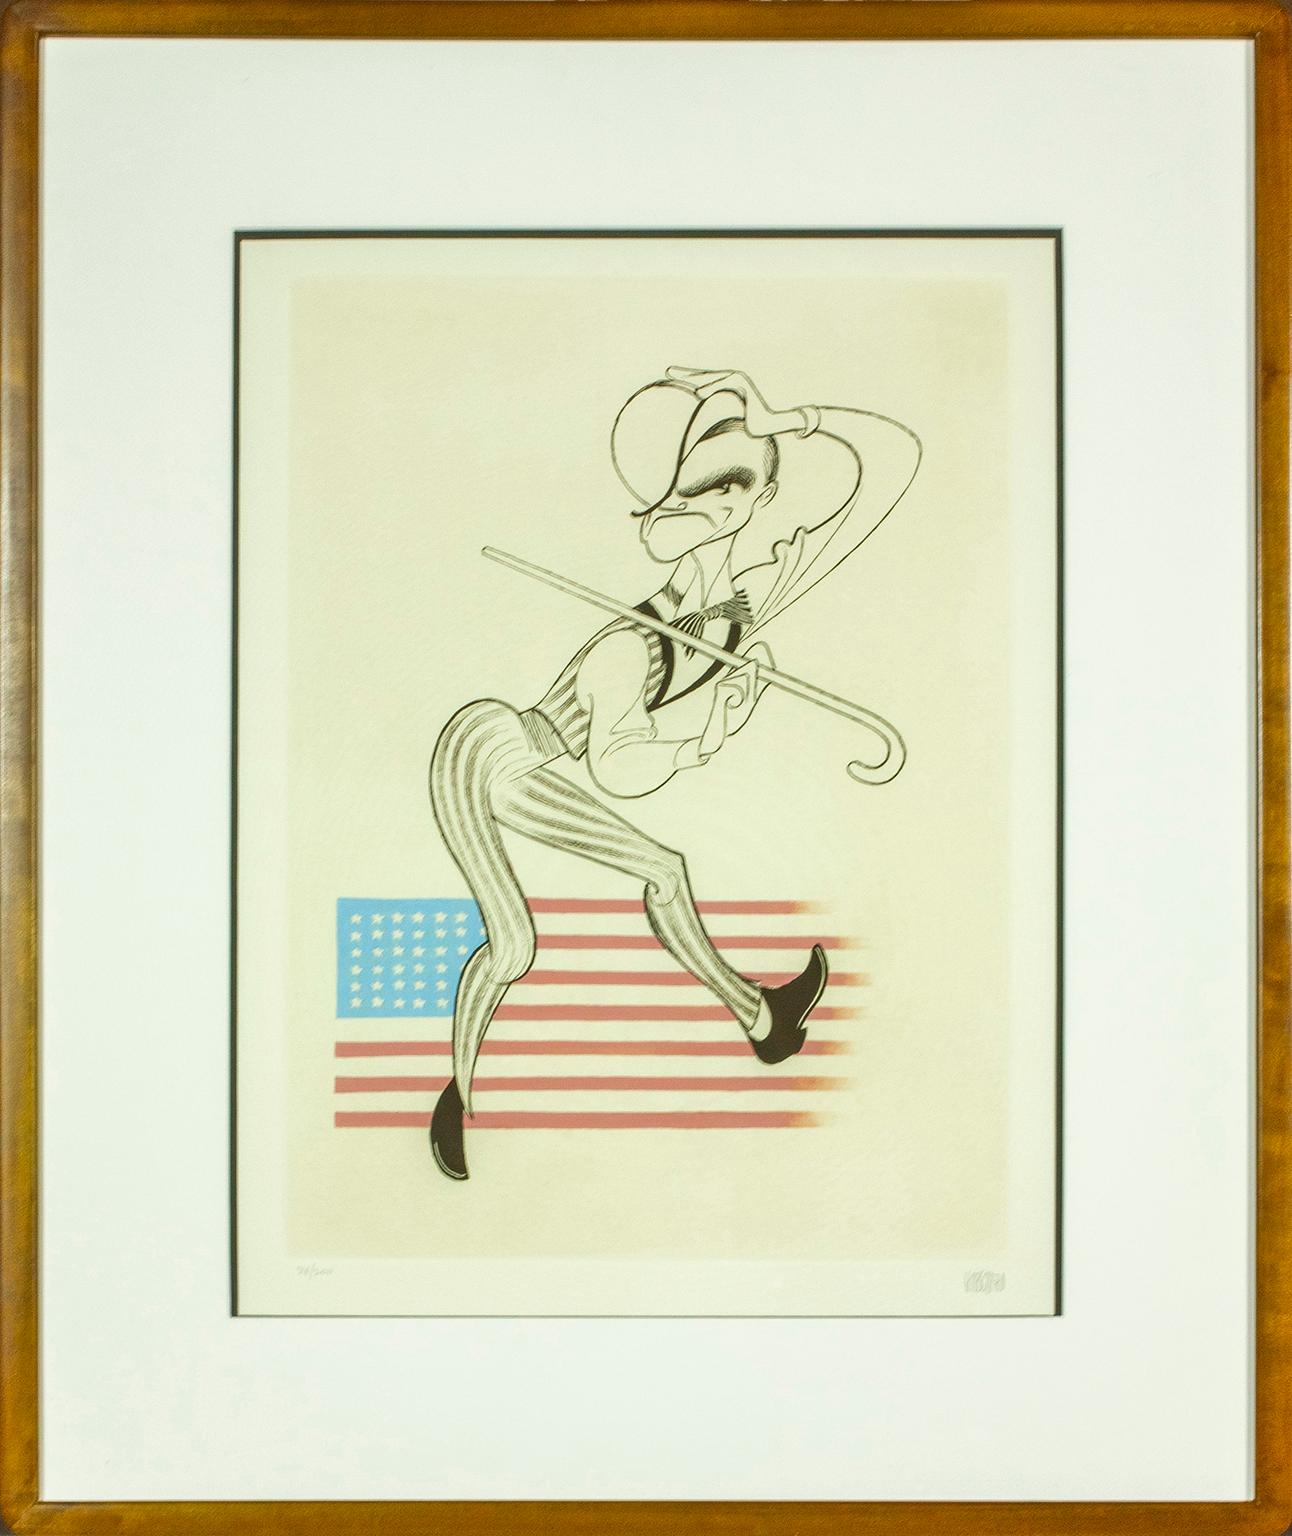 Figurative Print Albert Al Hirschfeld - « James Cagney » en « Yankee Doodle Dandy » signé, gravure originale d'Al Hirschfeld